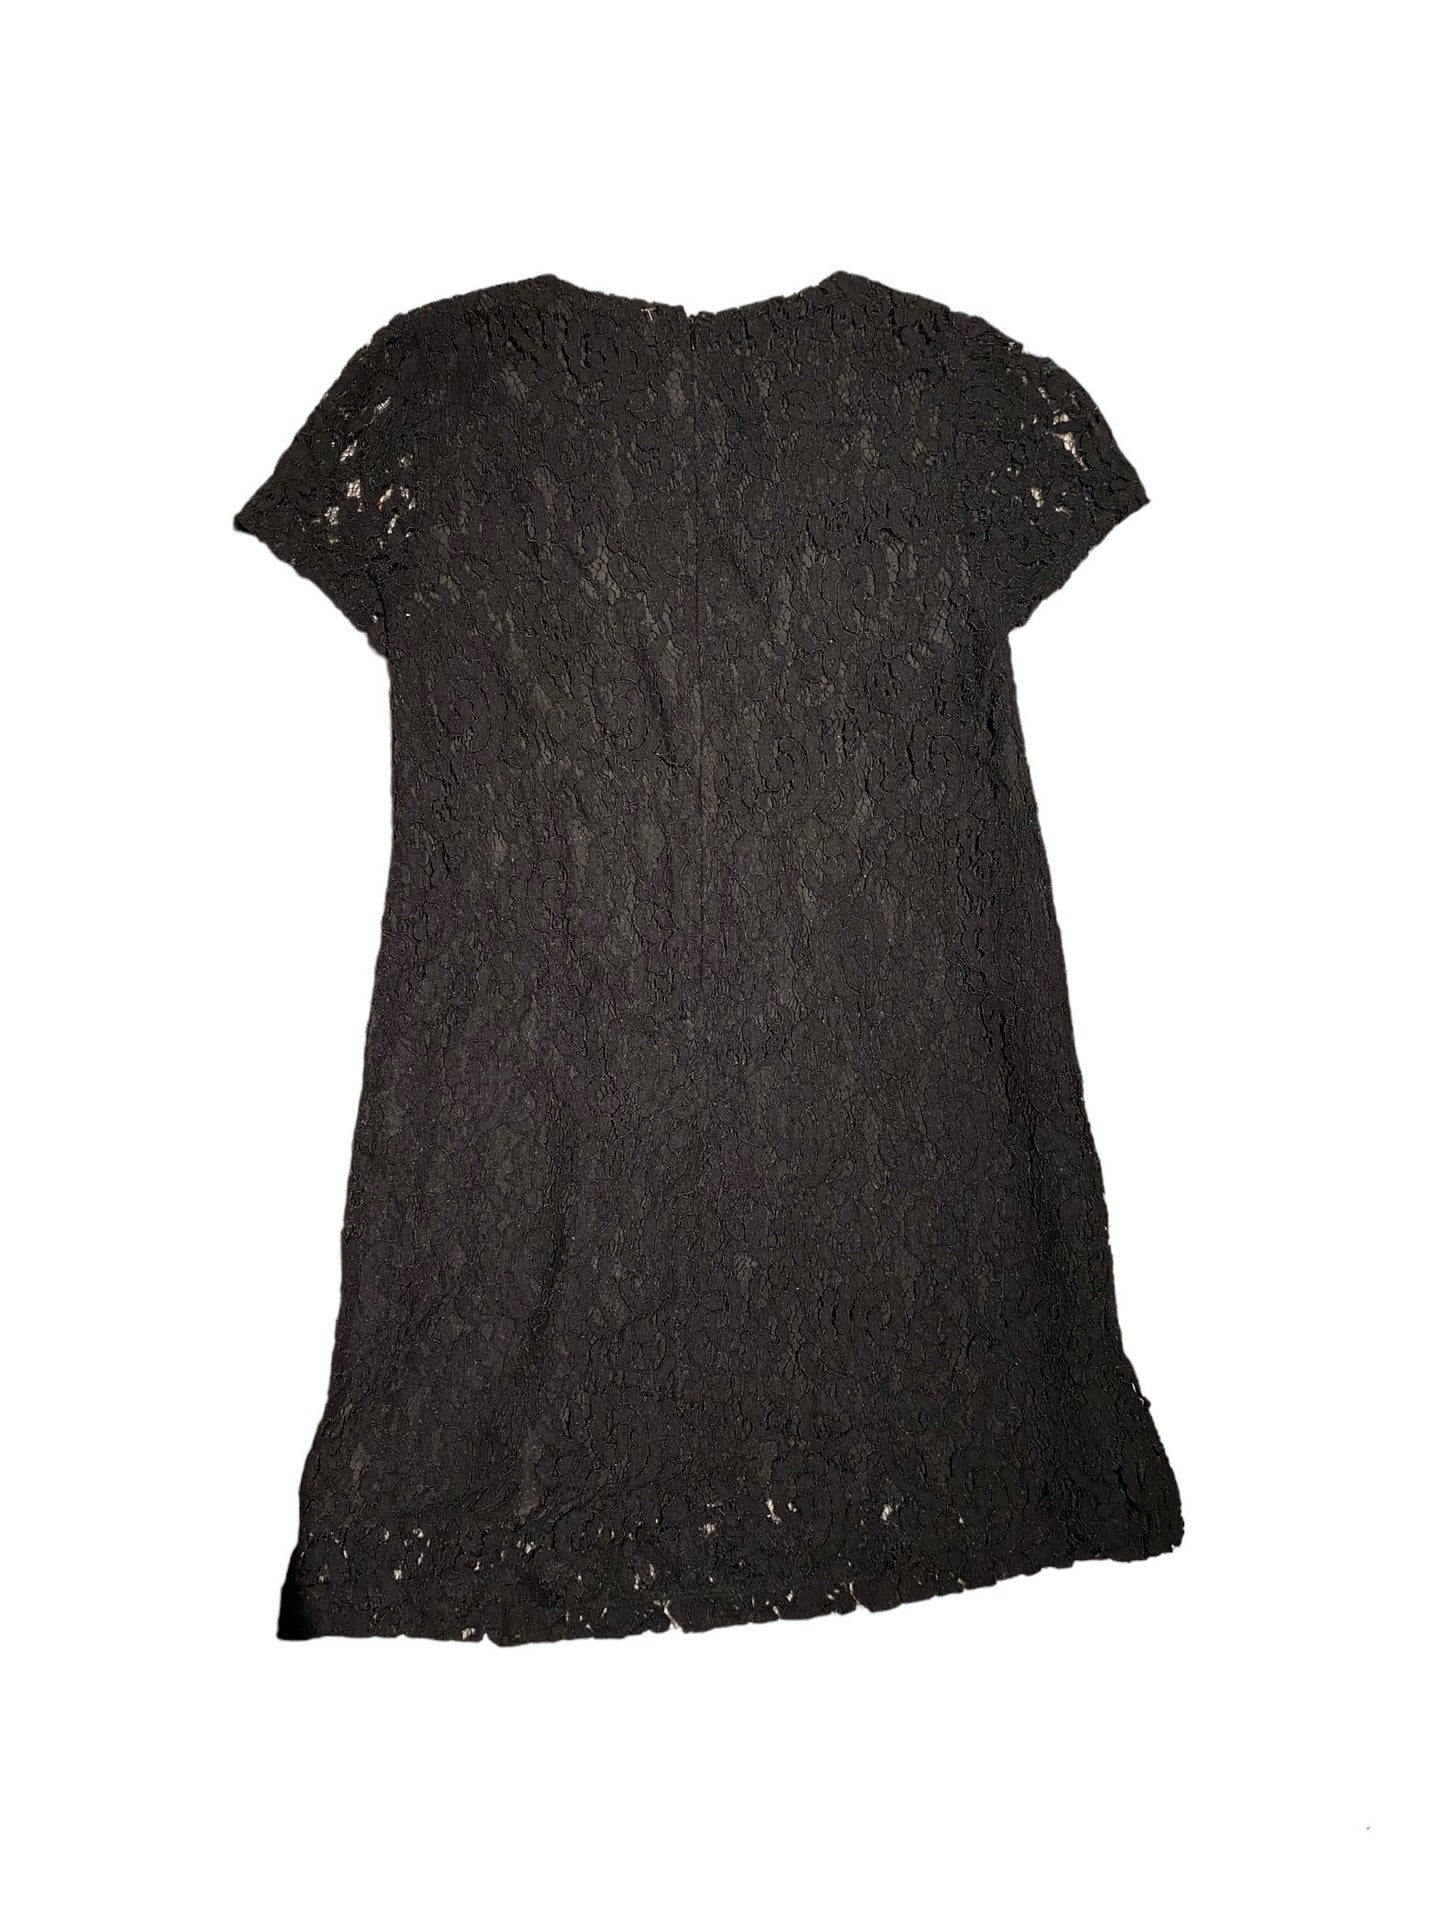 Lace dress (black)